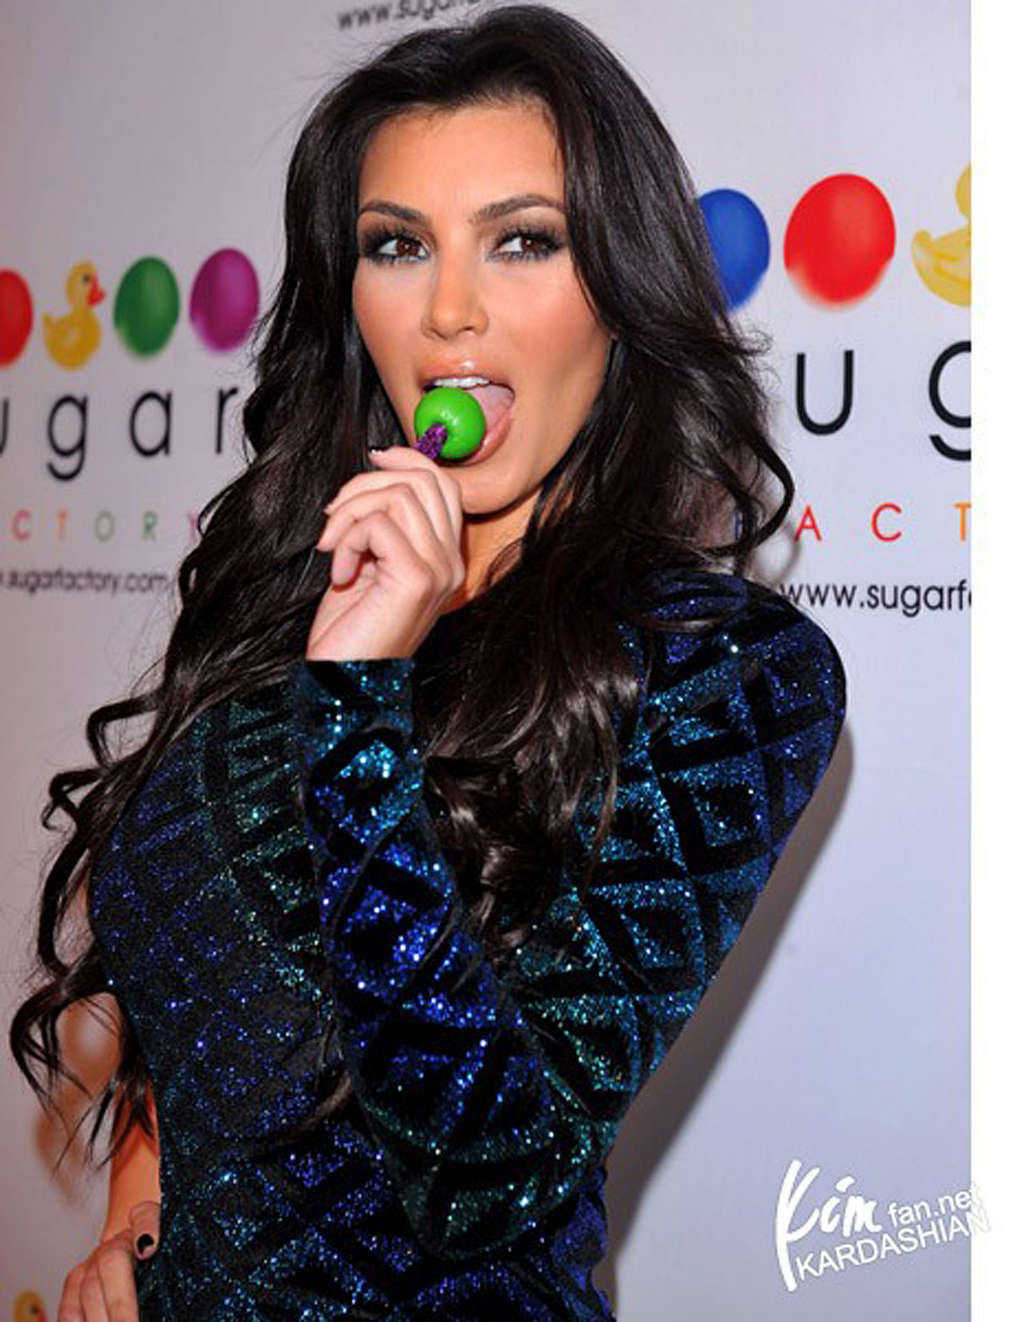 Kim Kardashian licking lollipop on a extremely sexy way hot photos #75363053